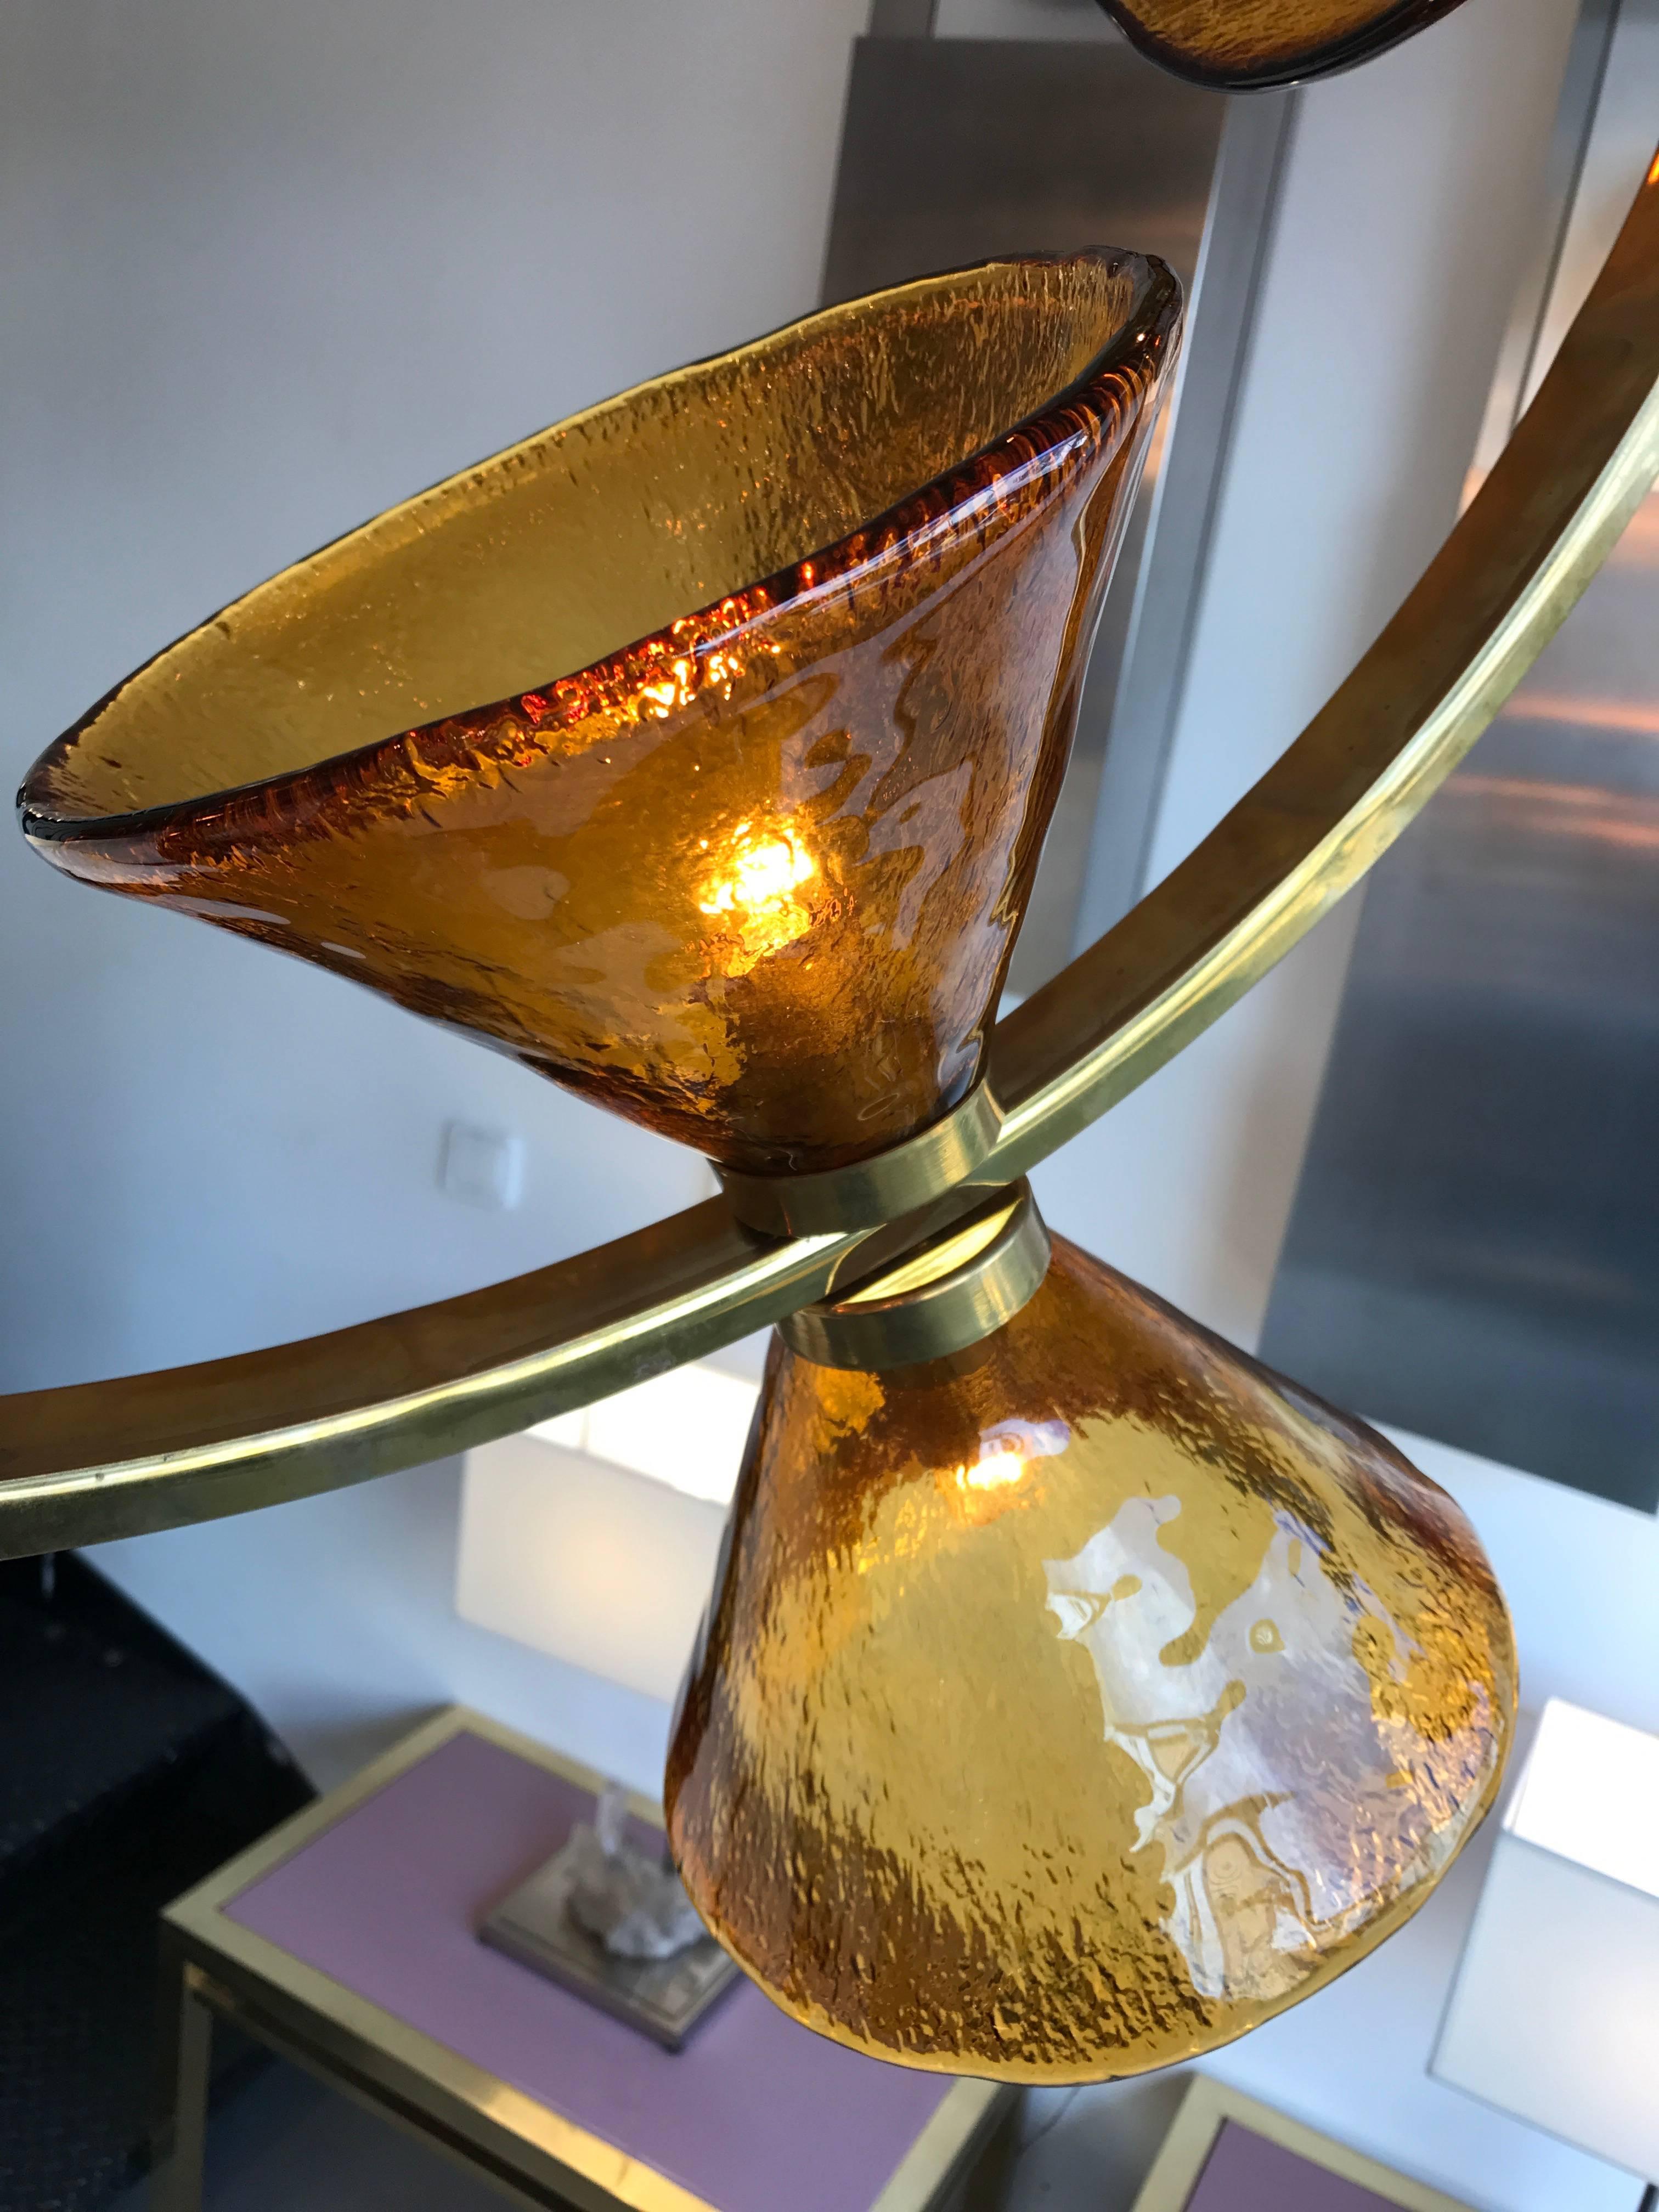 Chandelier or ceiling pendant light, circle brass and diabolo blown amber Murano glass cone. In the style of Mazzega, Leucos, Venini, Vistosi, Hollywood Regency, Carlo Nason, Poliarte. Very impressive and decorative.